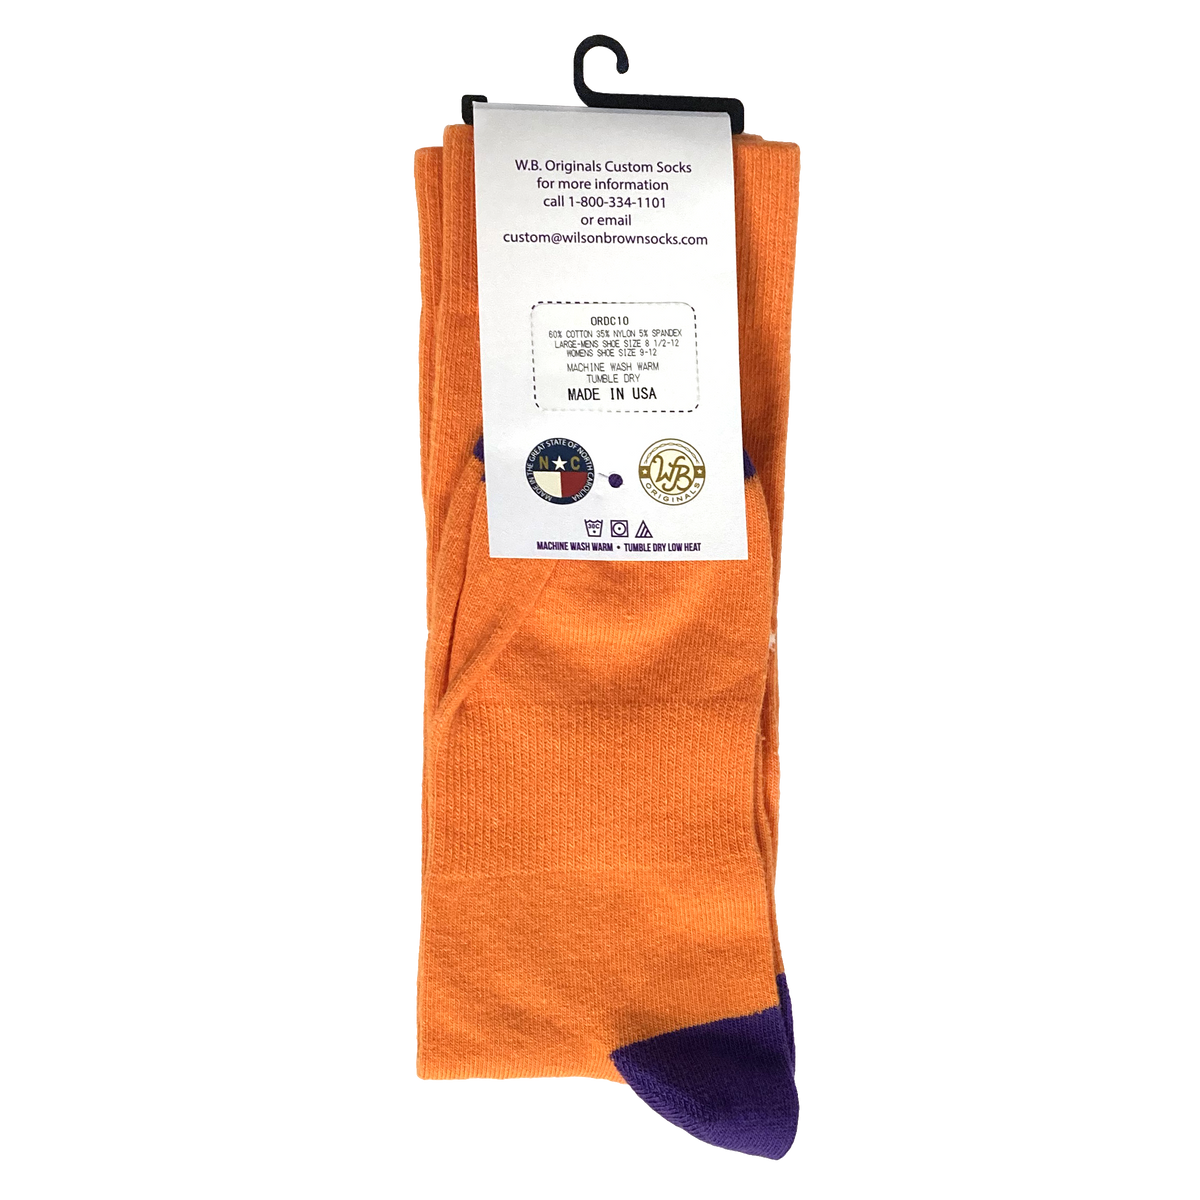 Clemson Orange Socks with White Paw